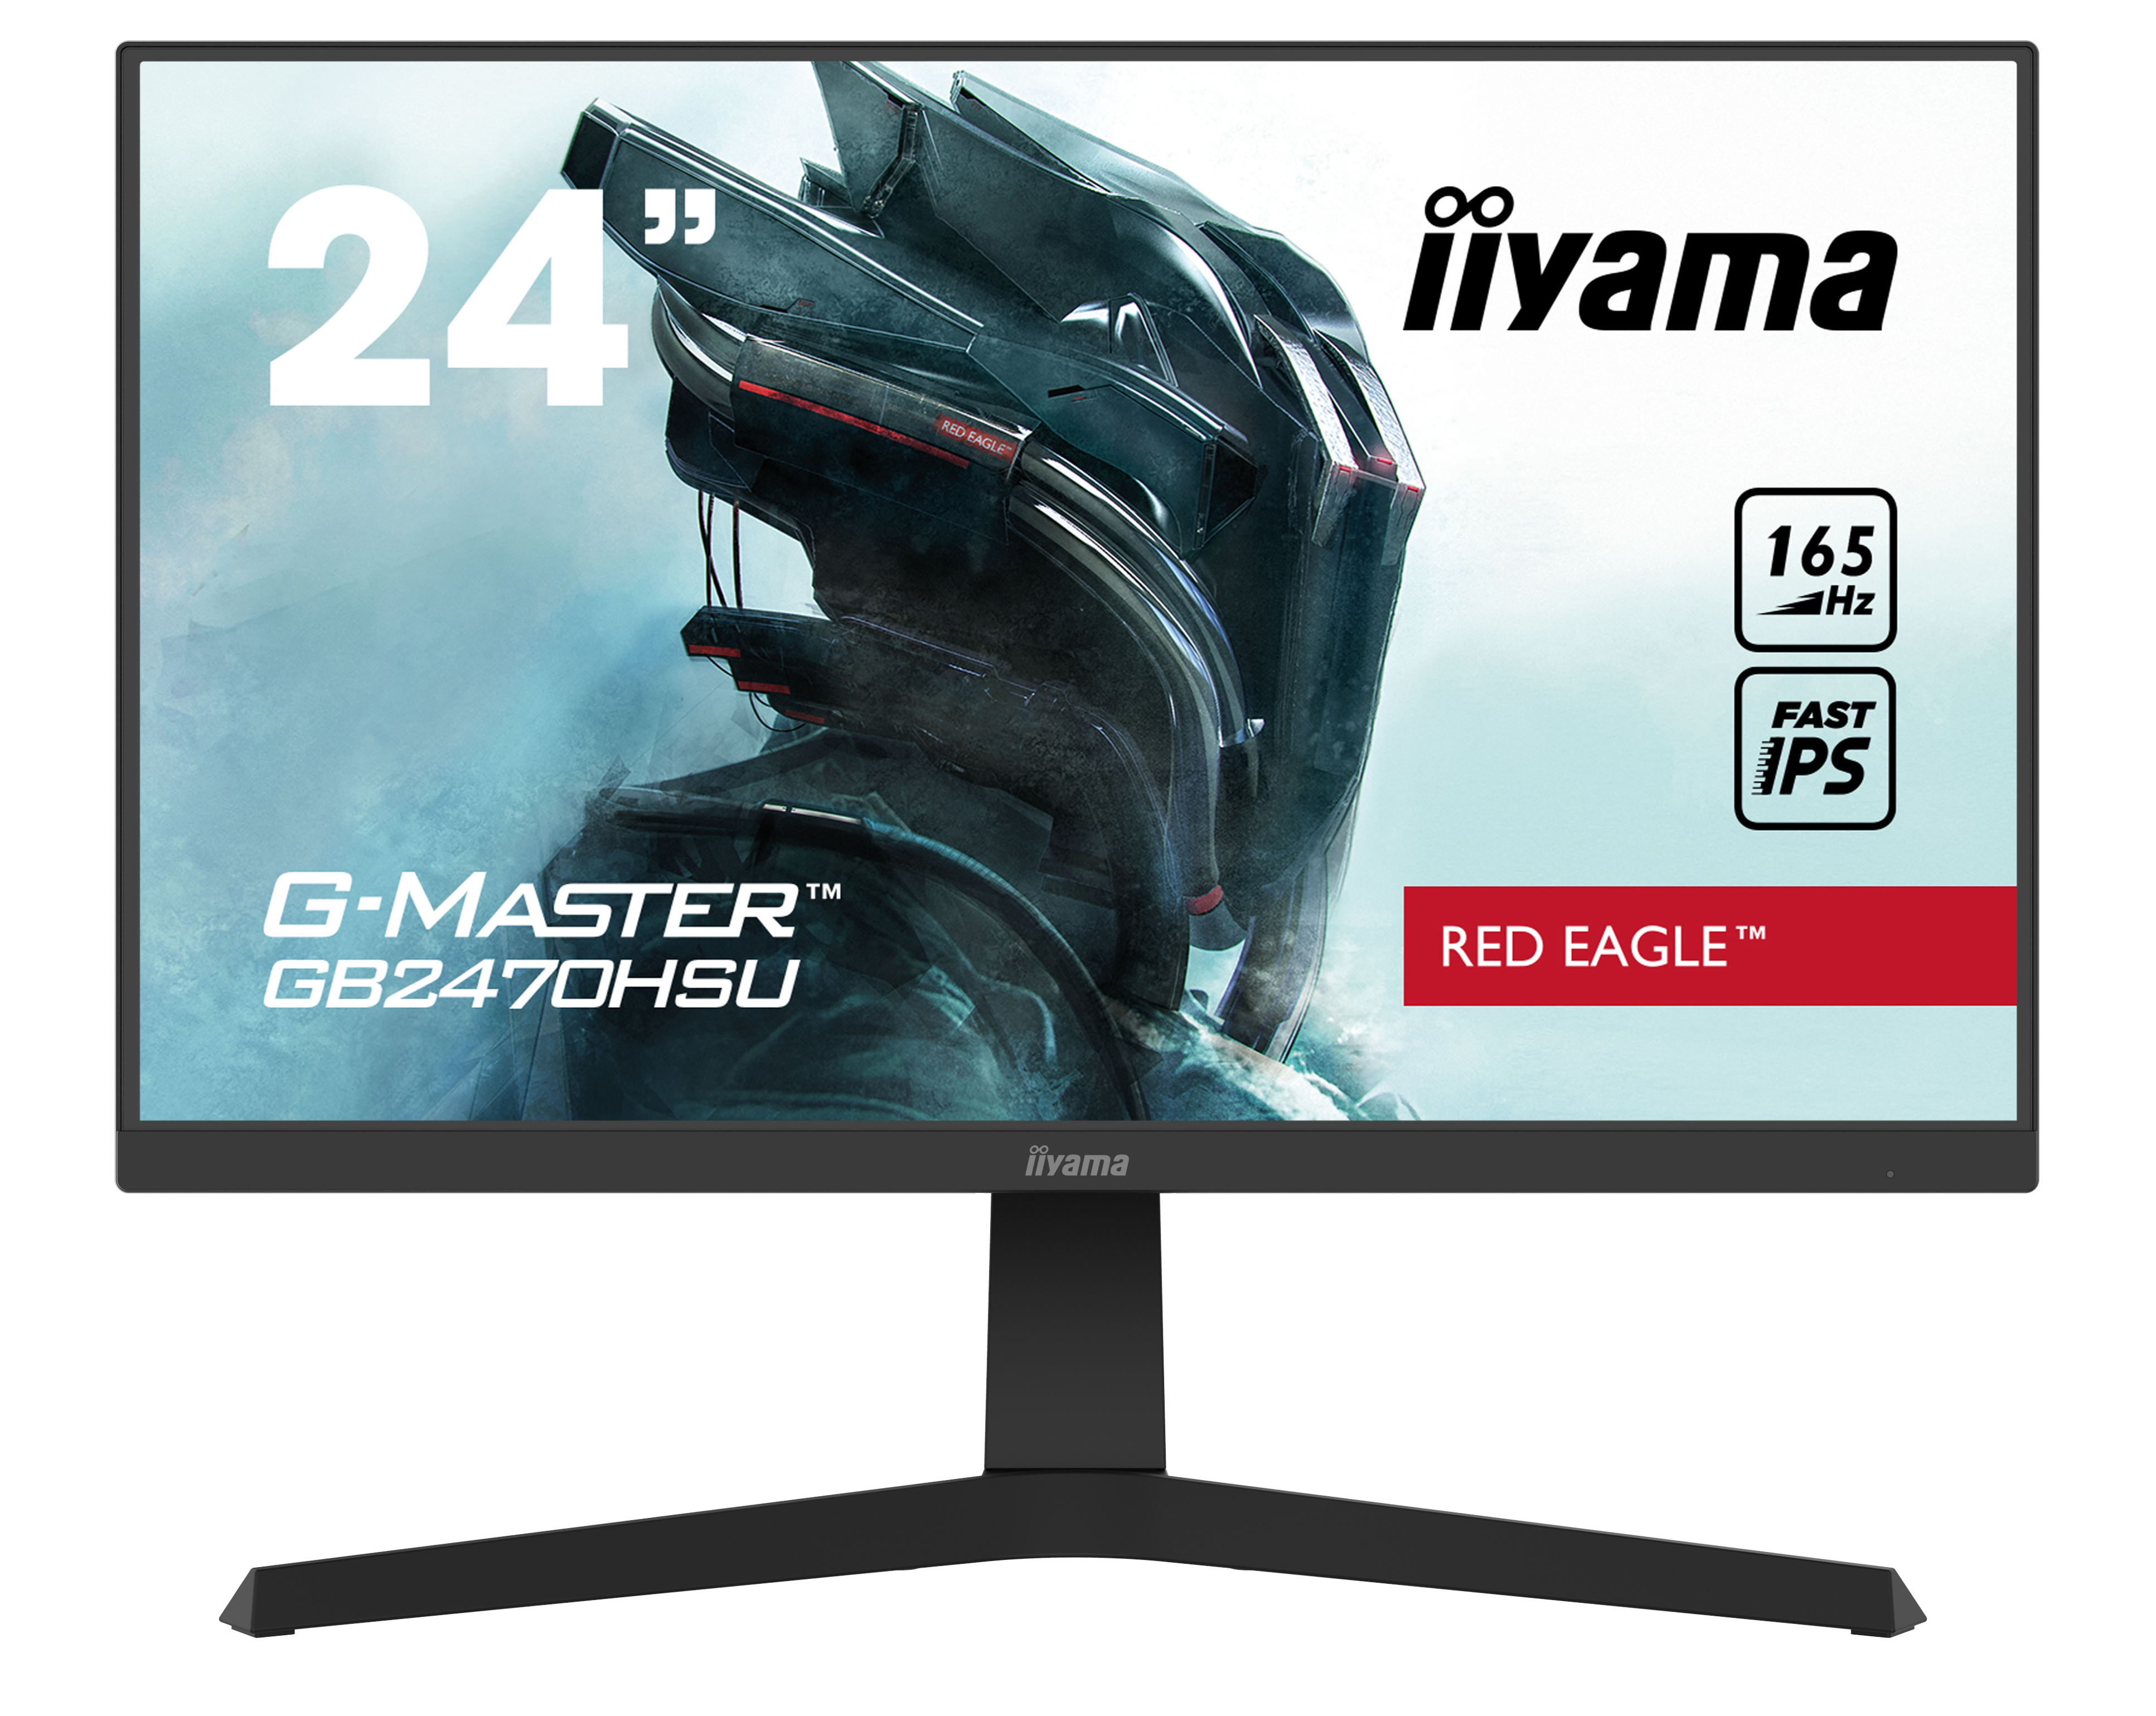 Iiyama G-MASTER GB2470HSU-B1 RED EAGLE | 23,8" | 1920 x 1080 @165Hz (2.1 megapixel Full HD, DisplayPort) | Gaming Monitor